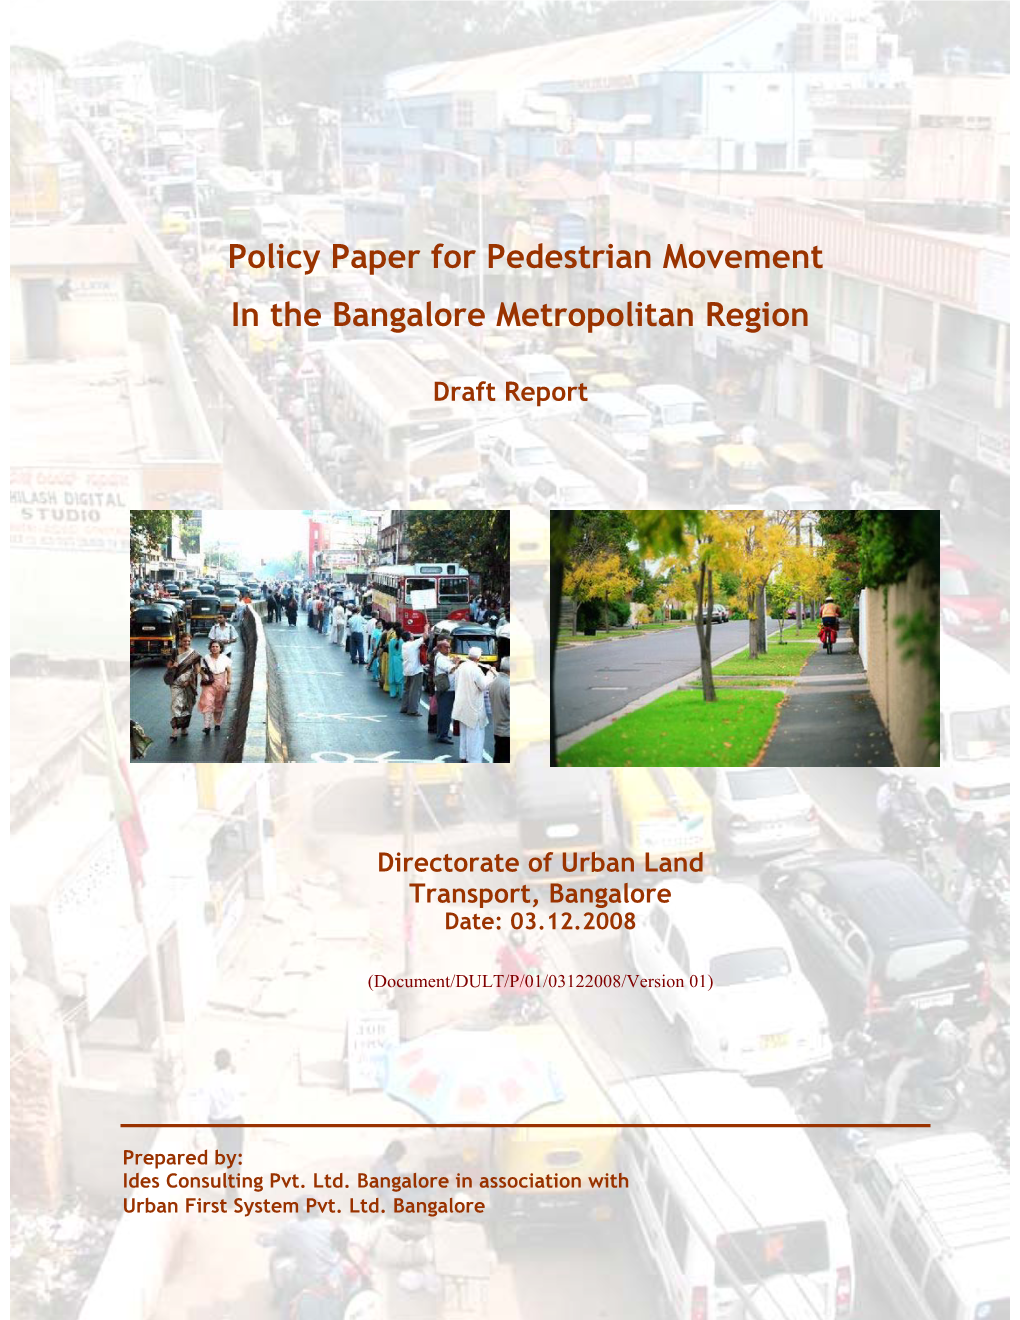 Policy Paper for Pedestrian Movement in the Bangalore Metropolitan Region